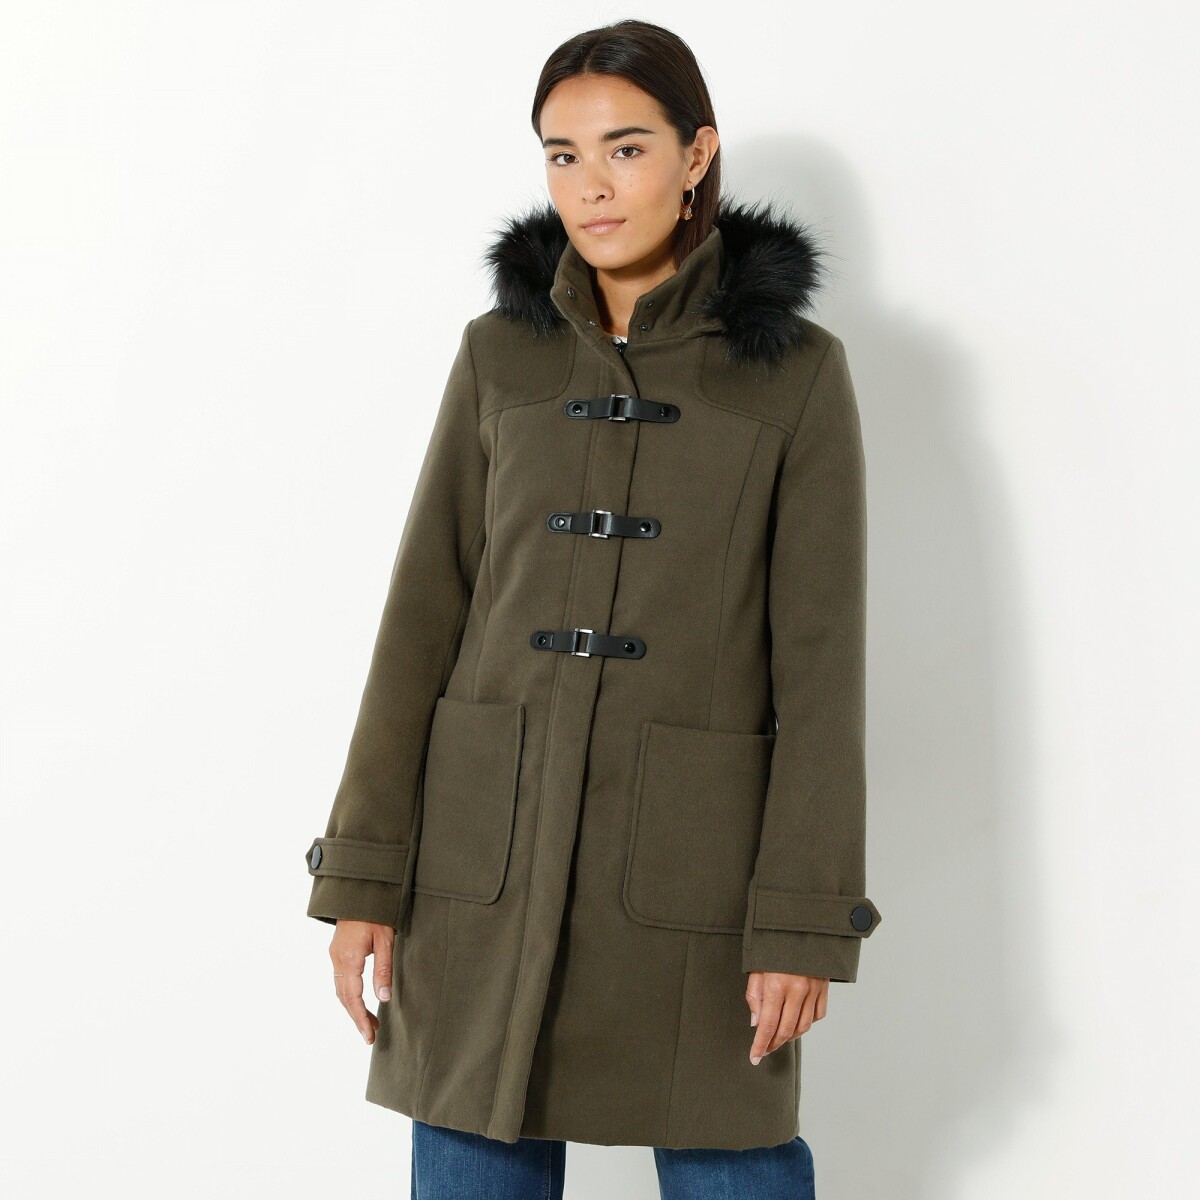 Jednofarebný kabát duffle-coat s kapucňou khaki 38